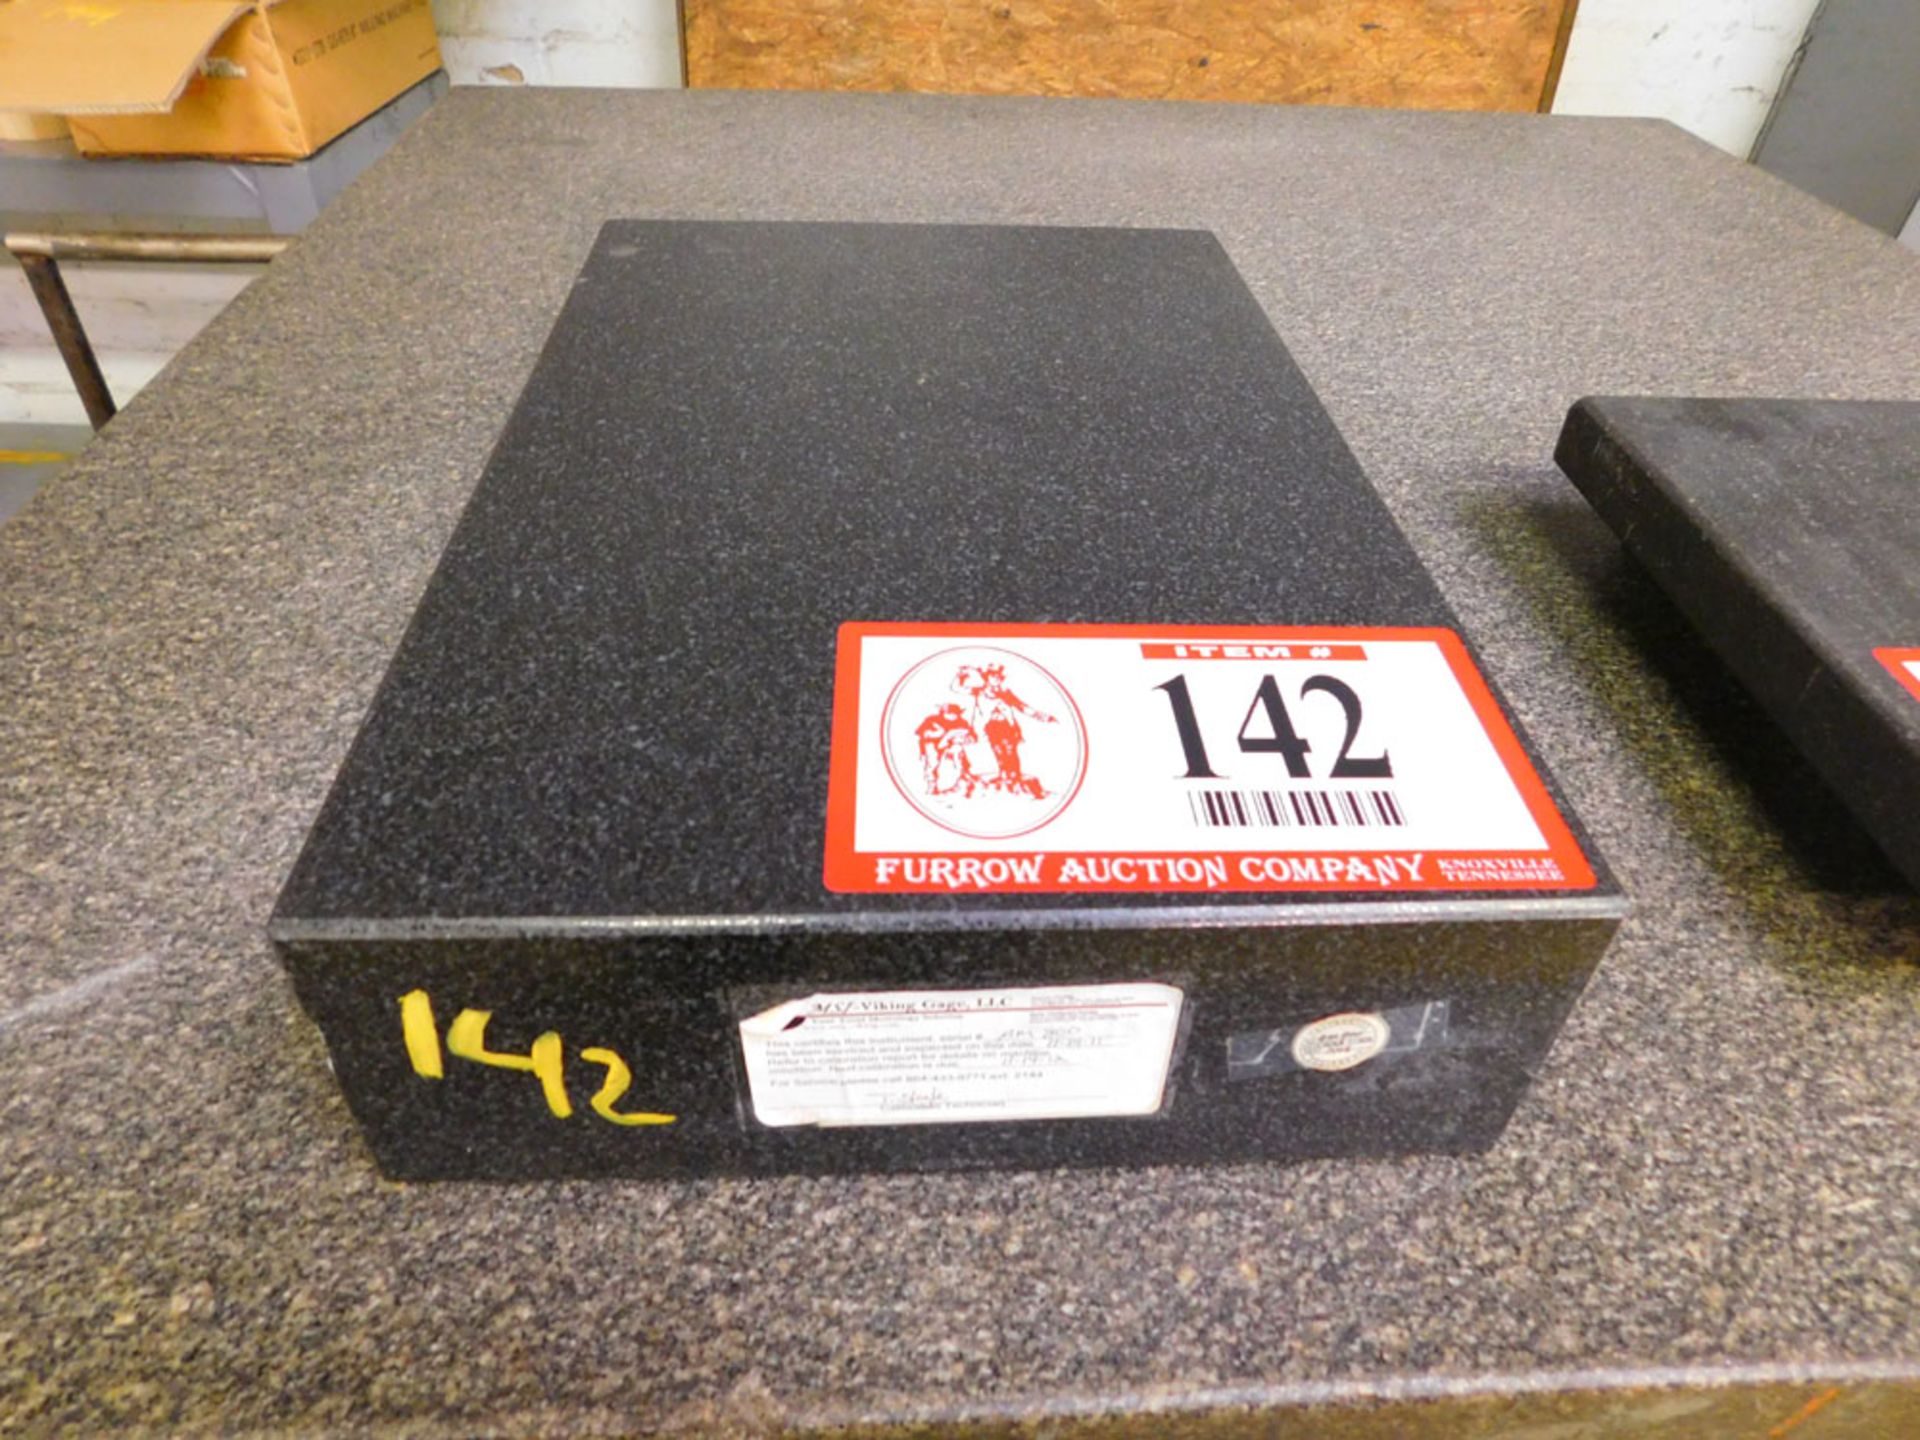 18" X 12" X 4" Granite Surface Plate